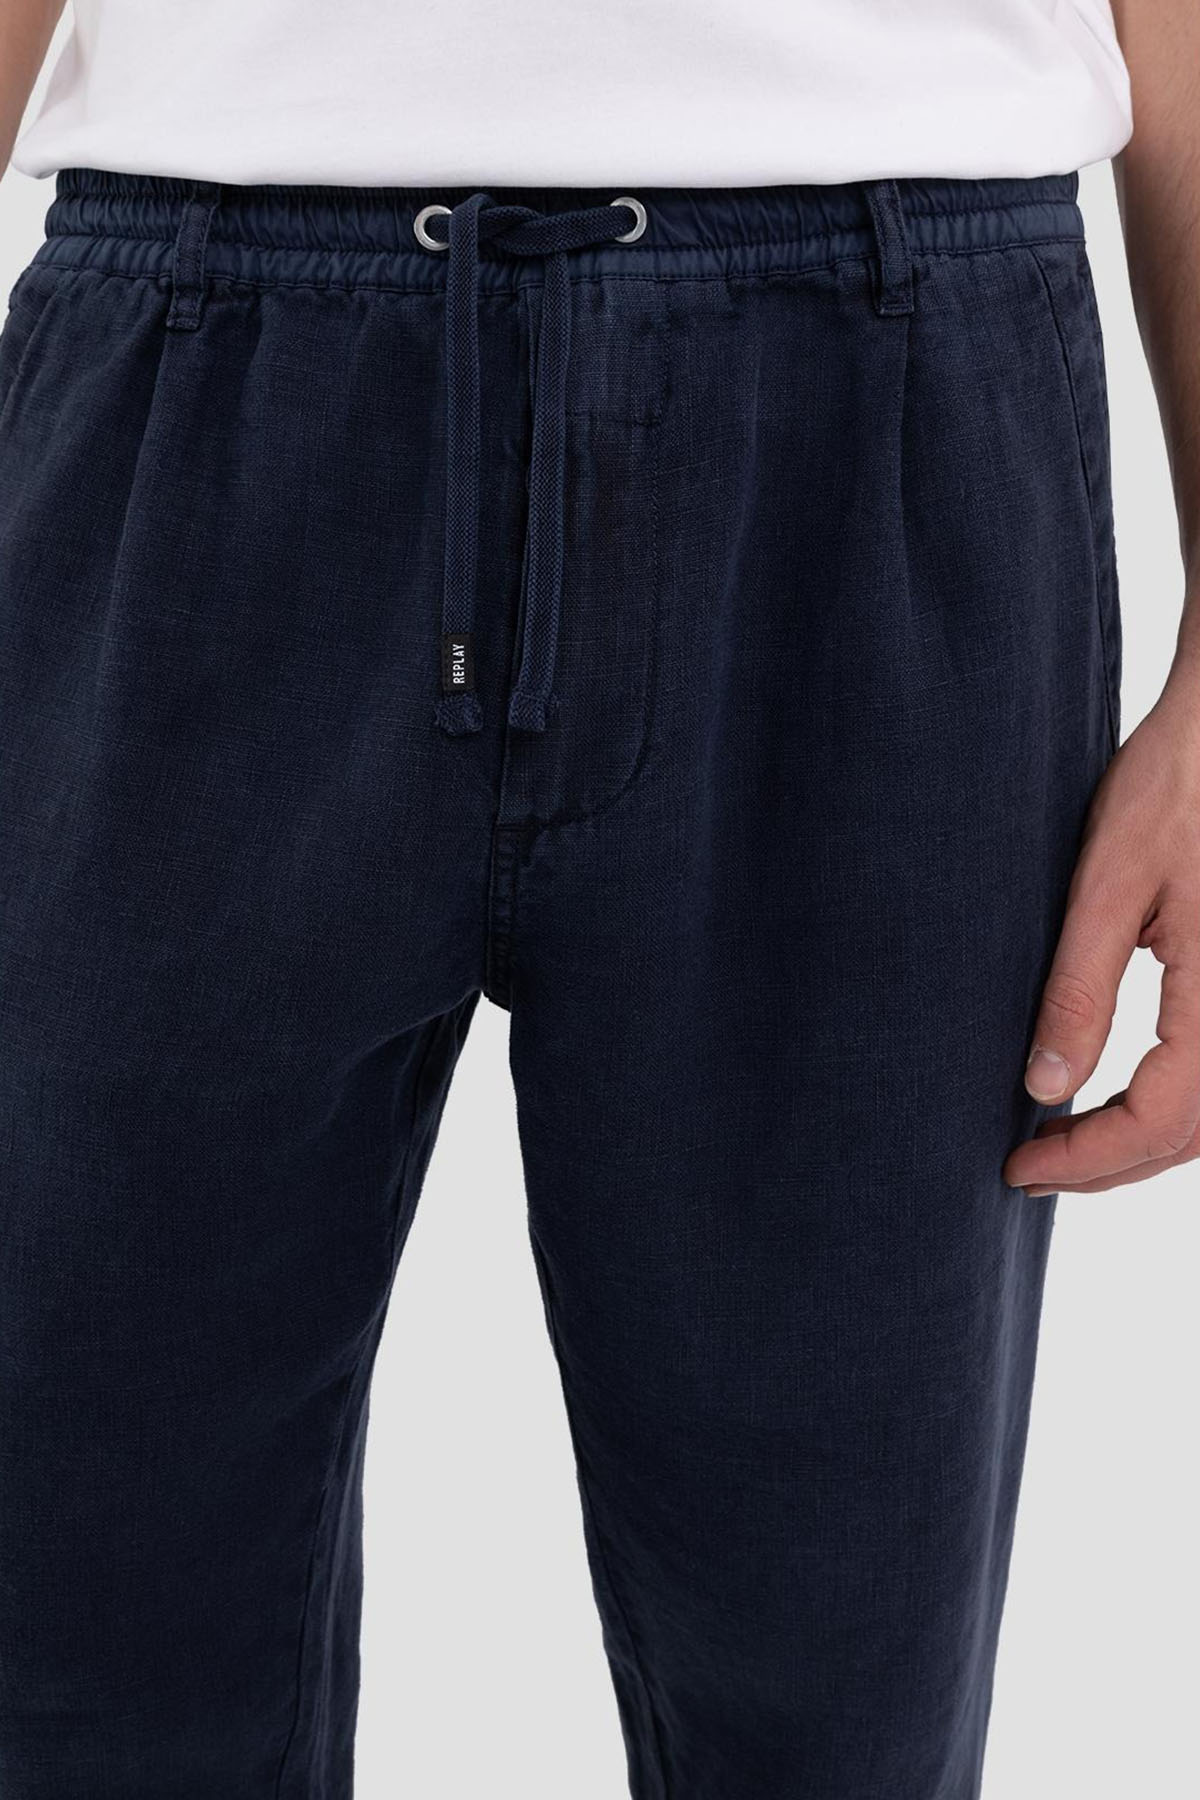 Replay Beli Lastikli Keten Jogger Pantolon-Libas Trendy Fashion Store